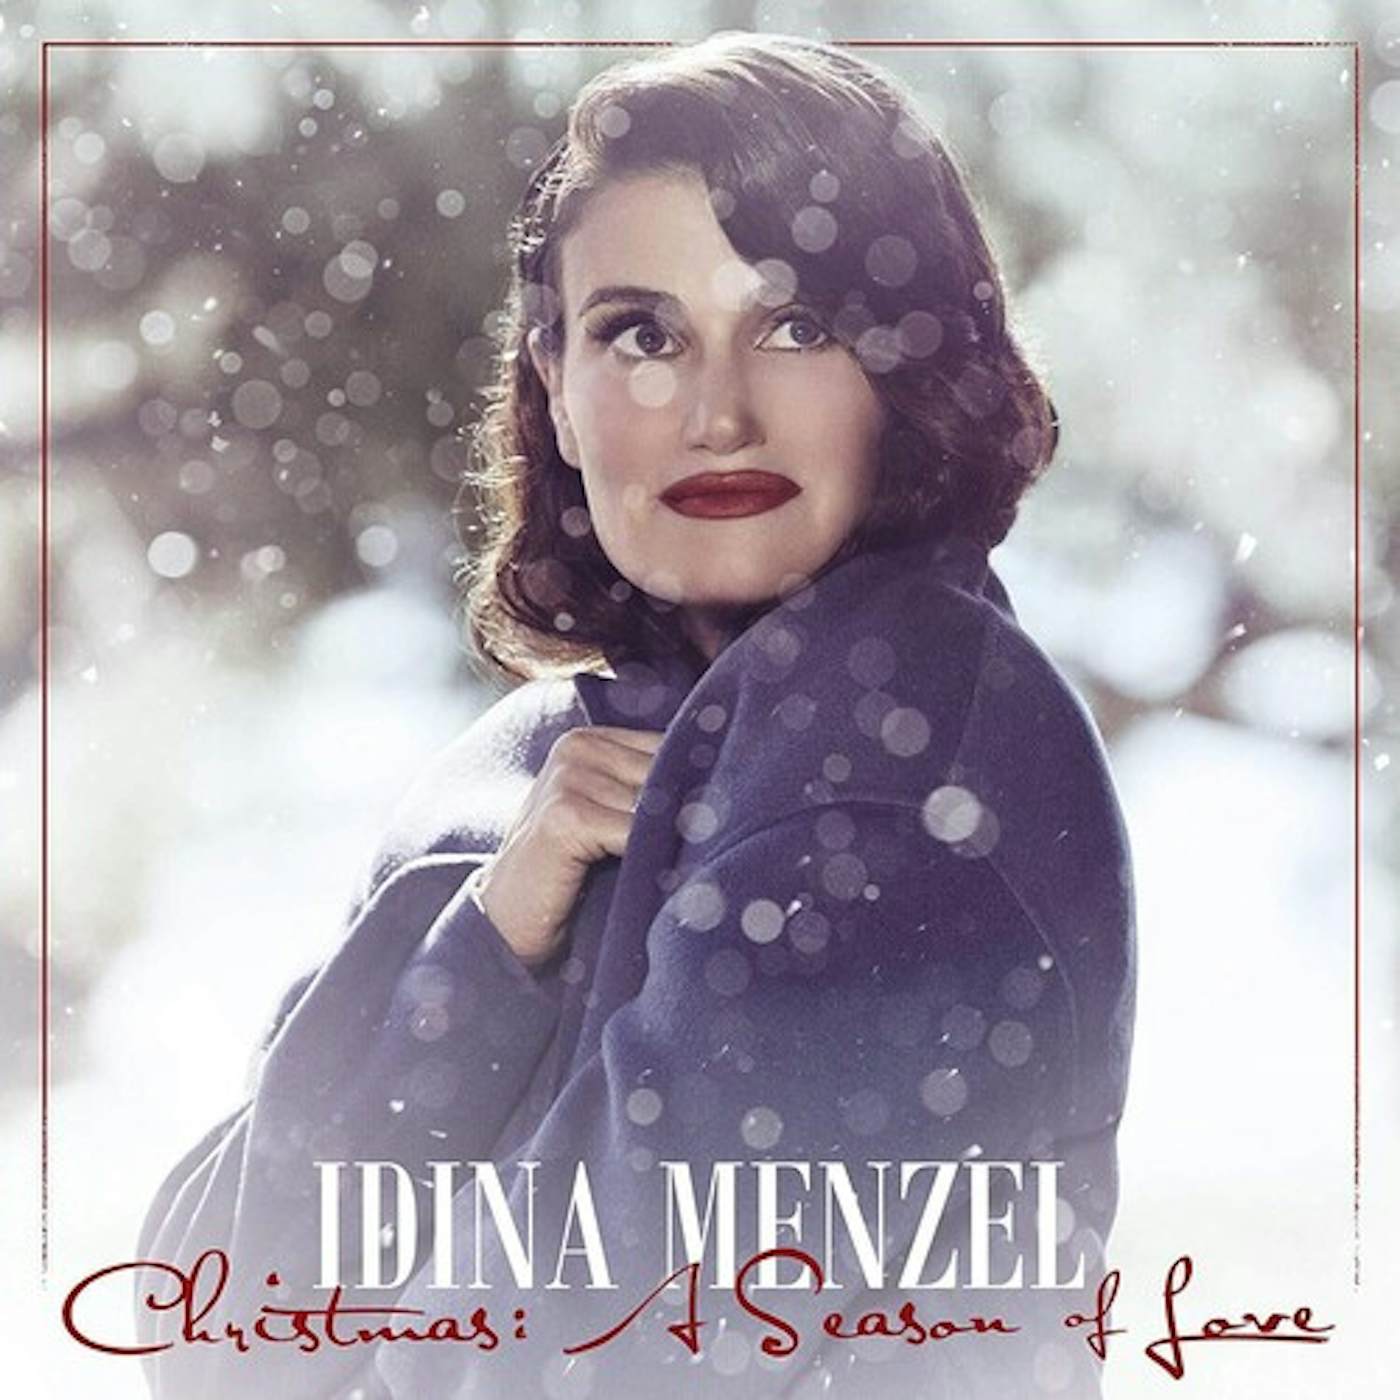 Idina Menzel Christmas: A Season Of Love Vinyl Record